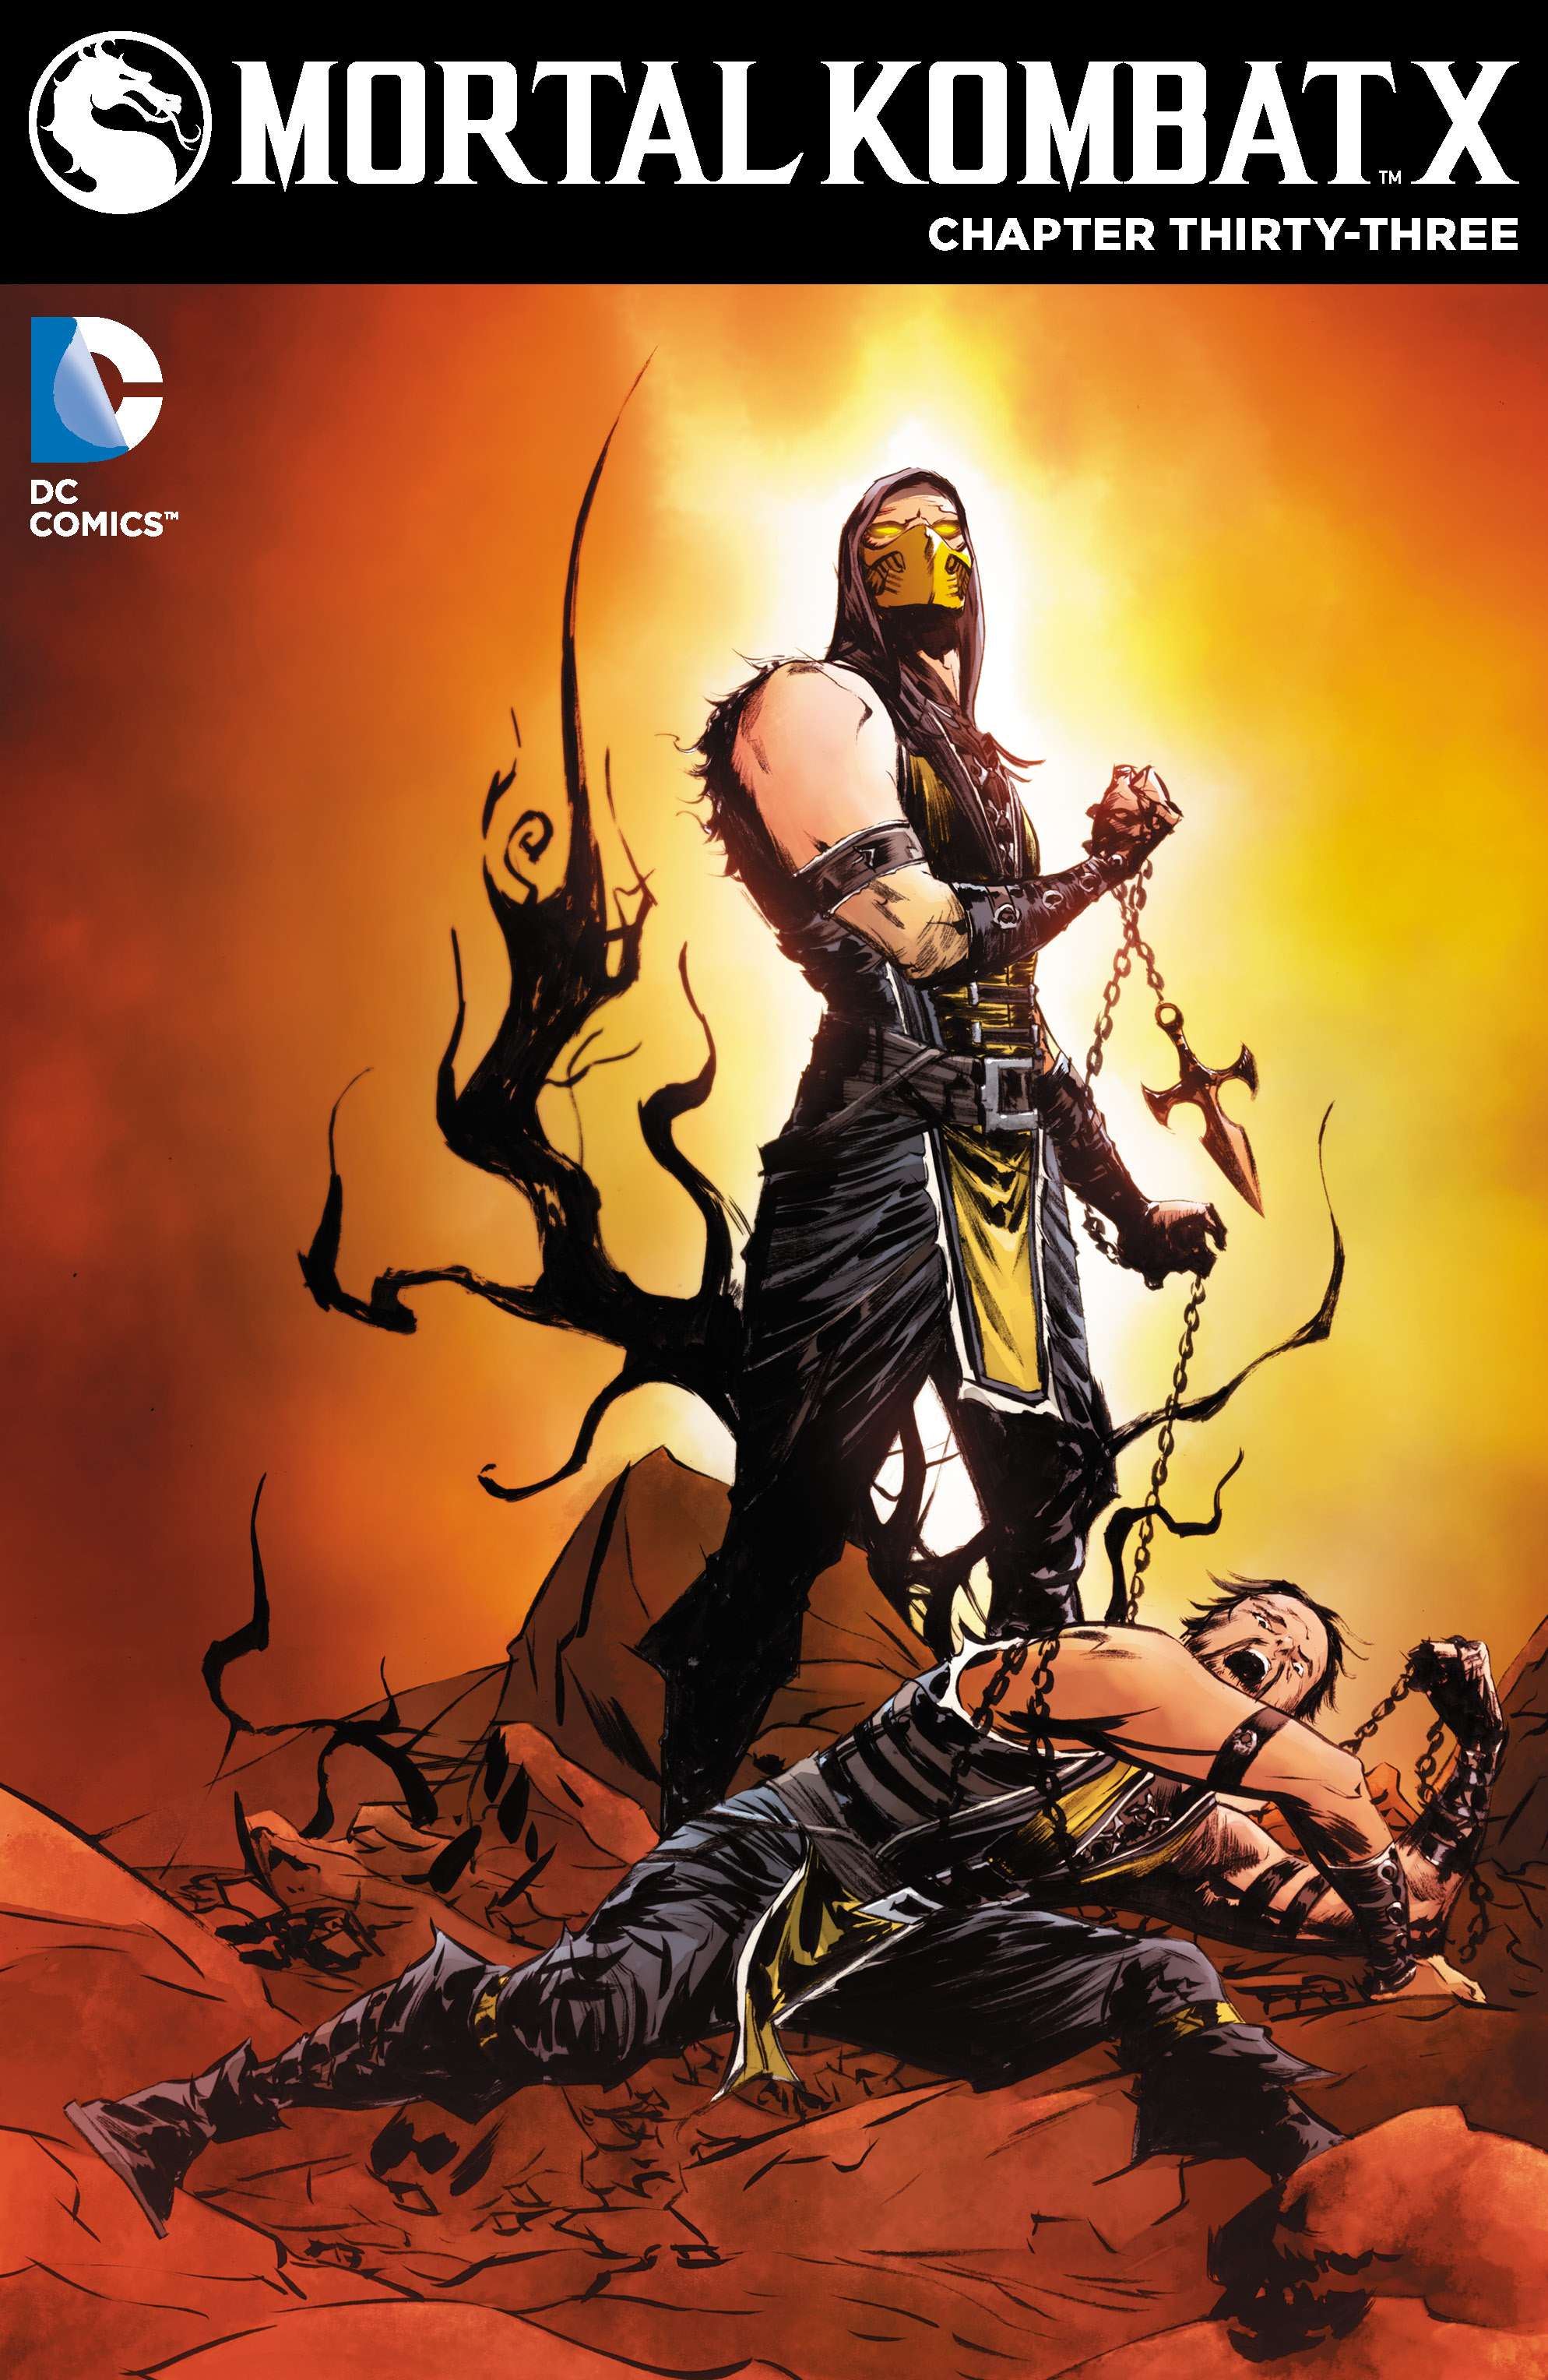 Mortal Kombat X #33 preview images